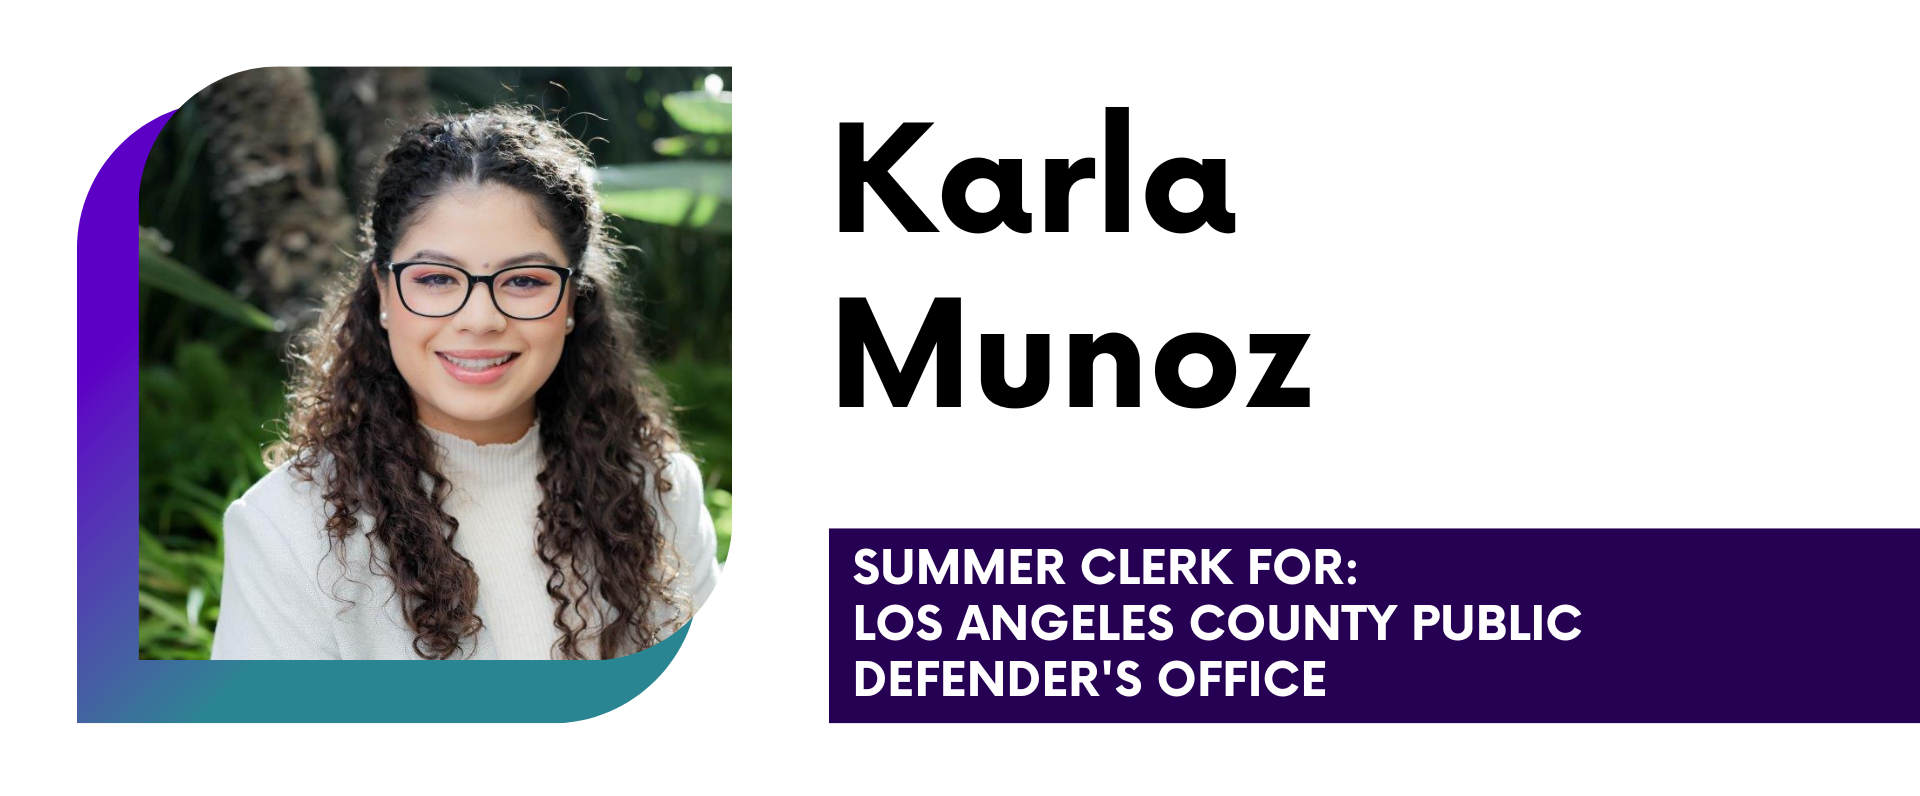 Karla Munoz Summer Clerk for: Los Angeles County Public Defender's Office